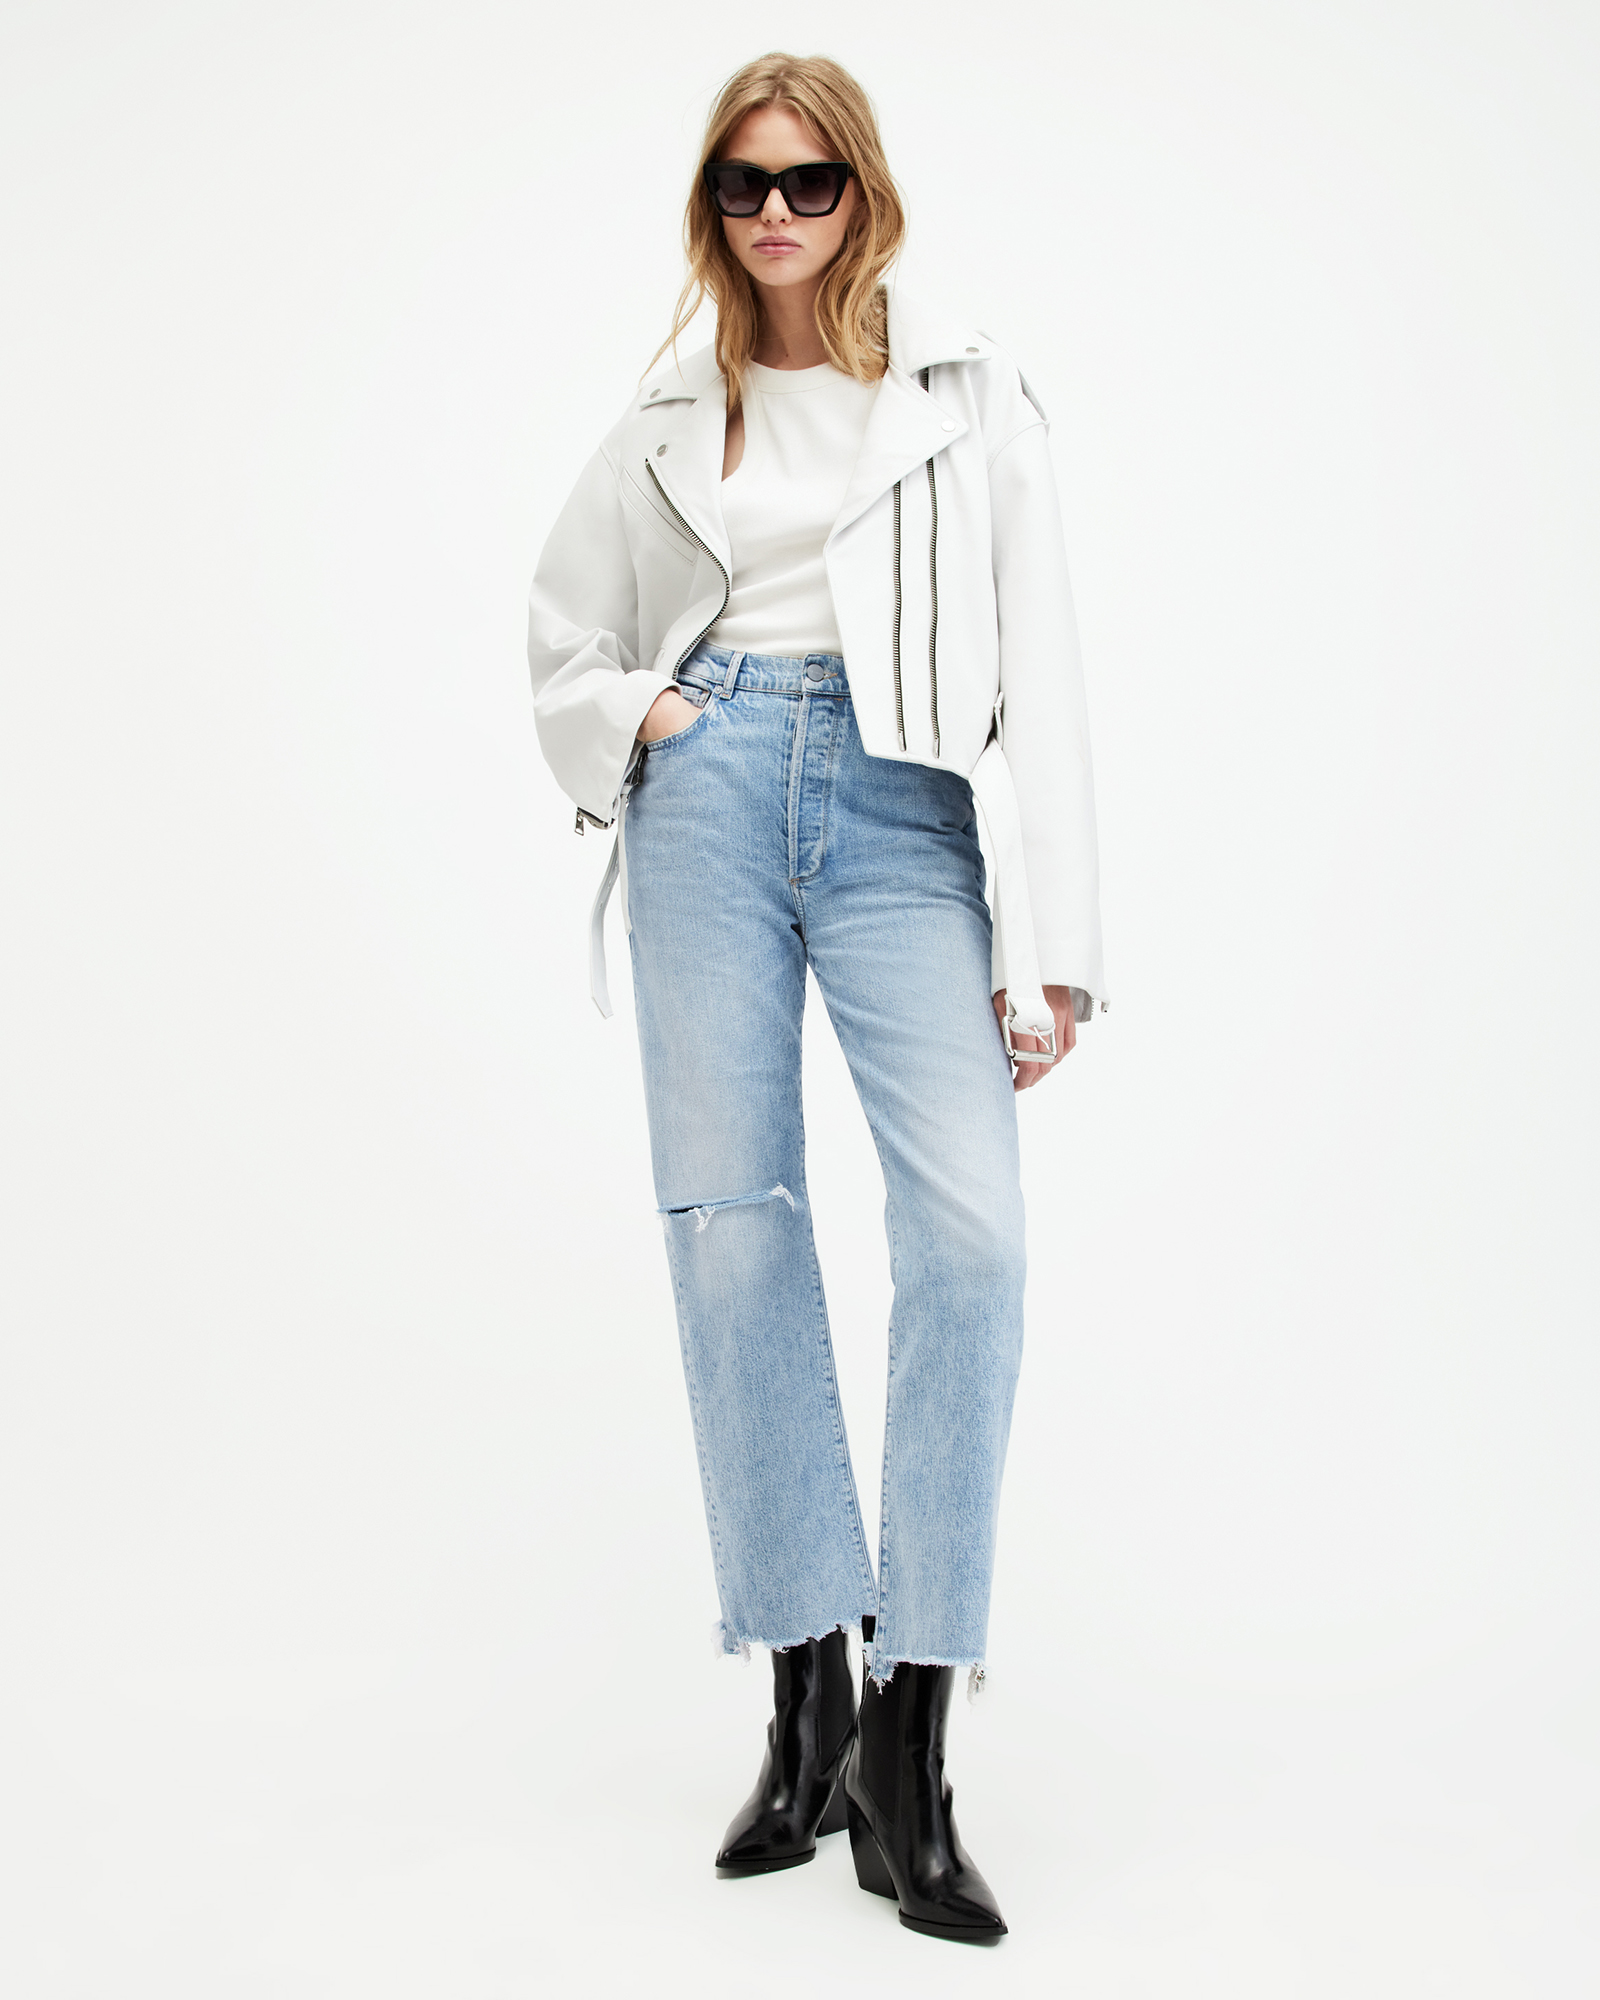 AllSaints Edie High Rise Straight Denim Jeans,, Light Indigo, Size: